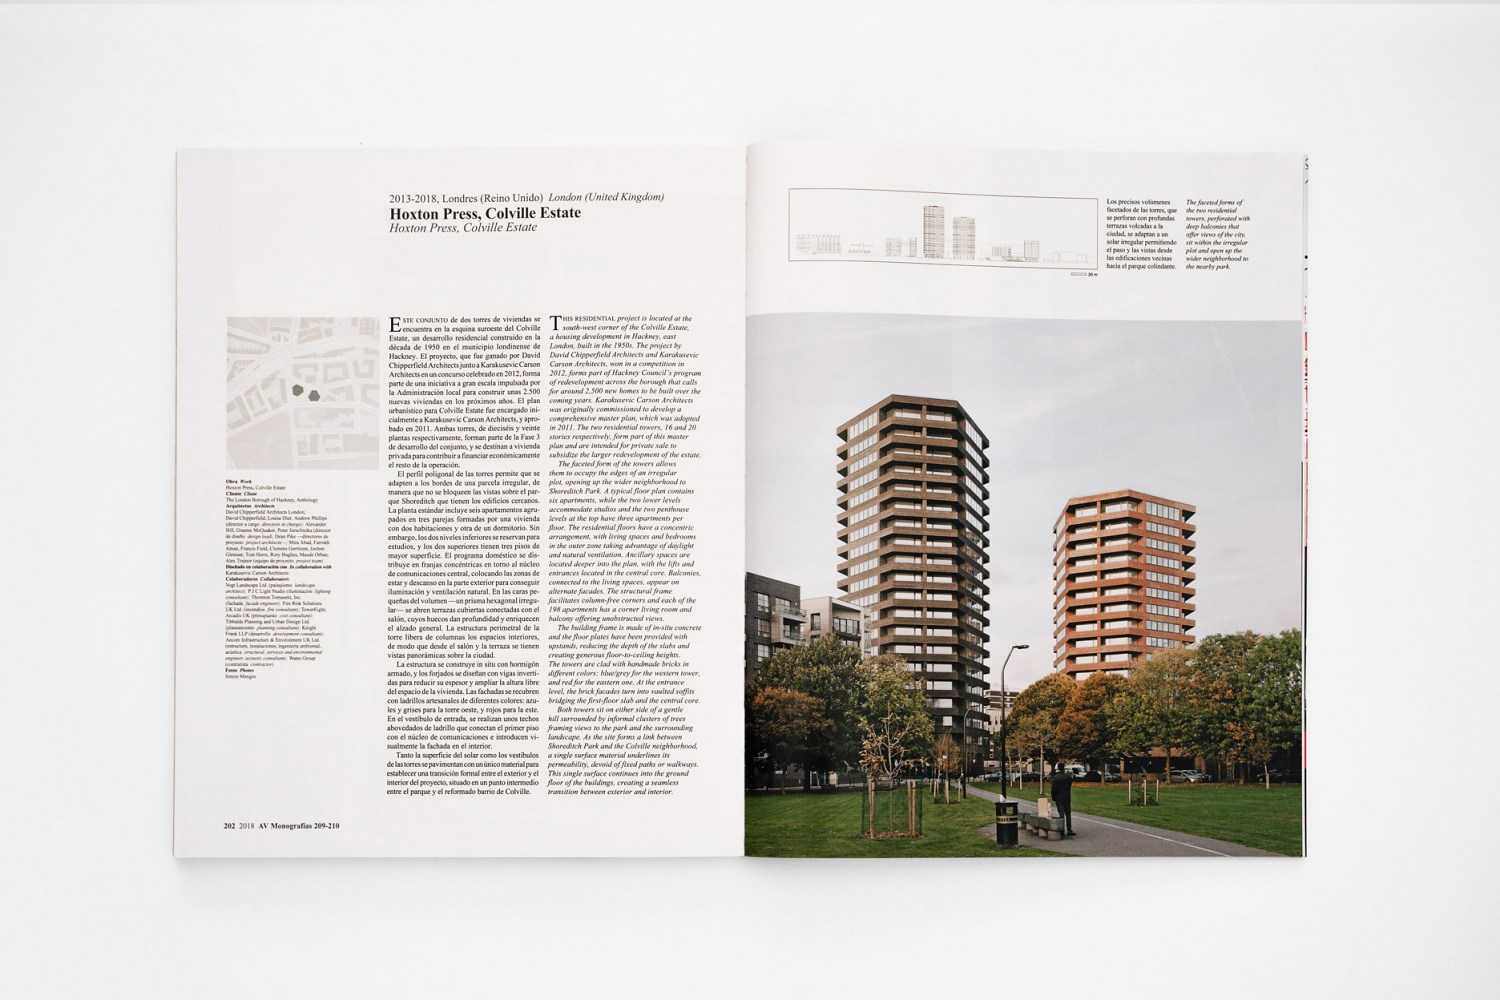 AV Monograph 209-210, David Chipperfield Architects 2009–2019 